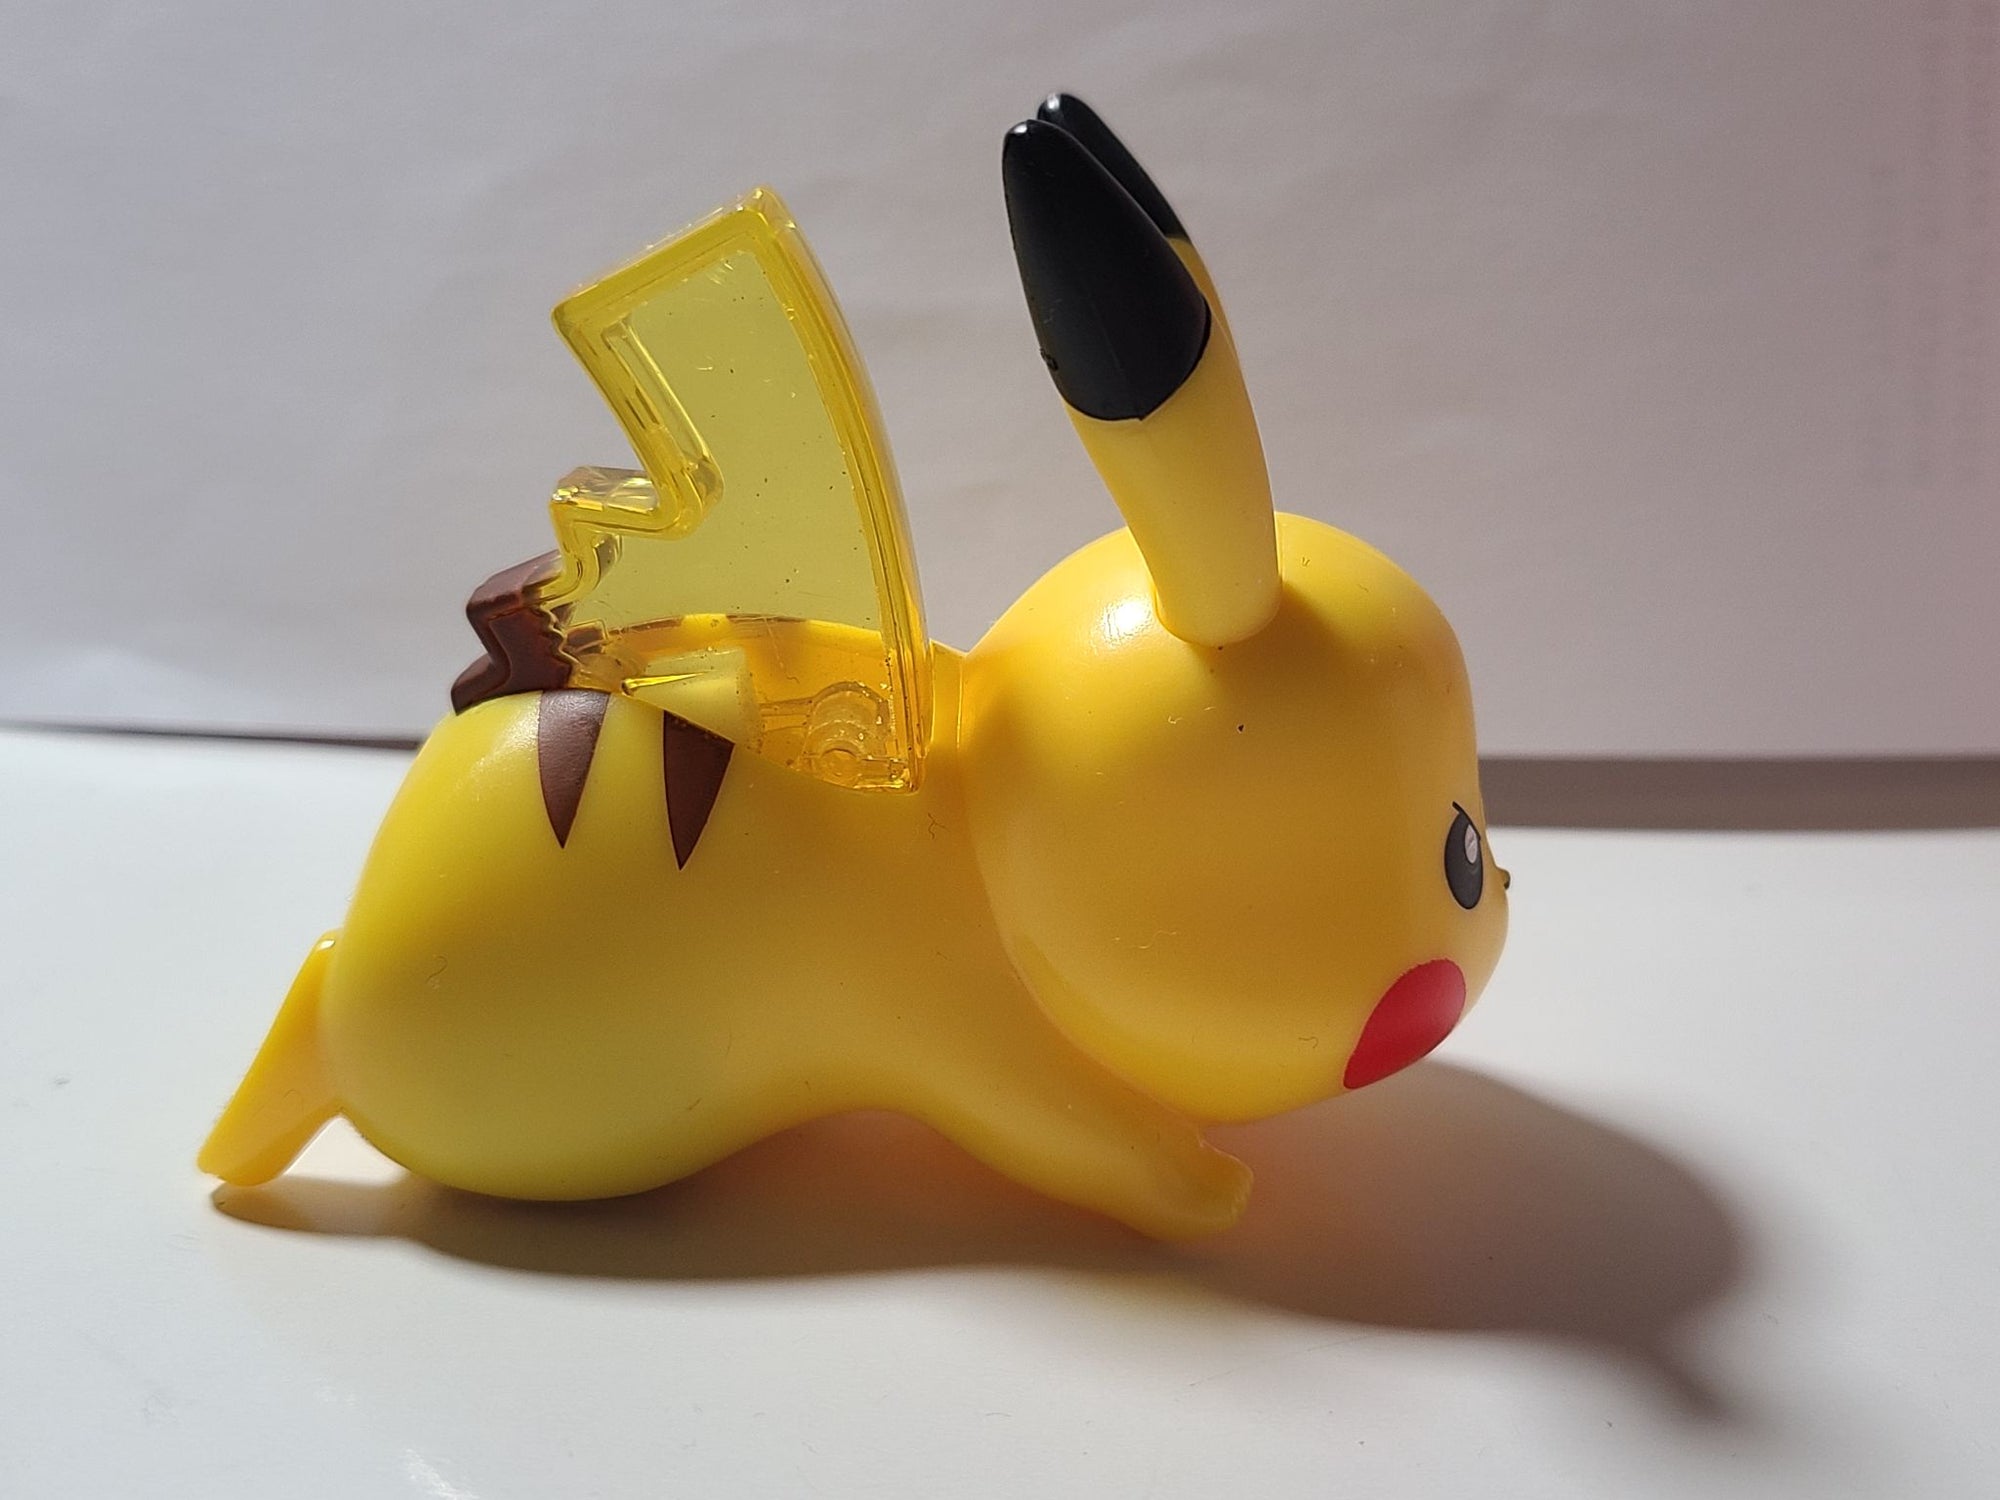 Pikachu - Pokemon Nintendo McDonalds Happy Meal Toy 2015  - 1